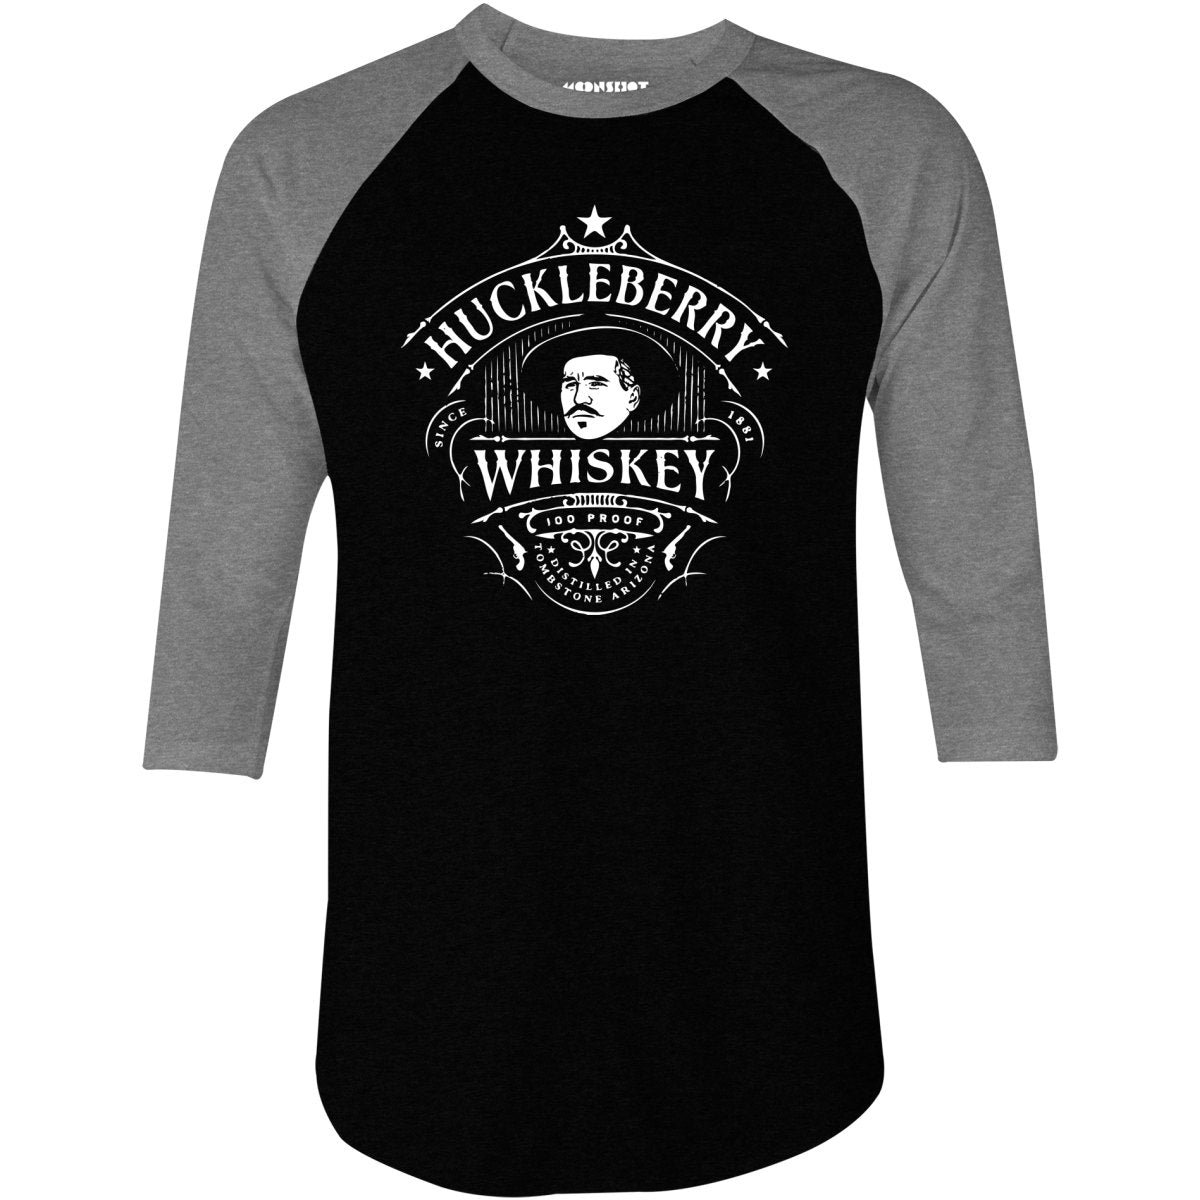 Huckleberry Whiskey - 3/4 Sleeve Raglan T-Shirt